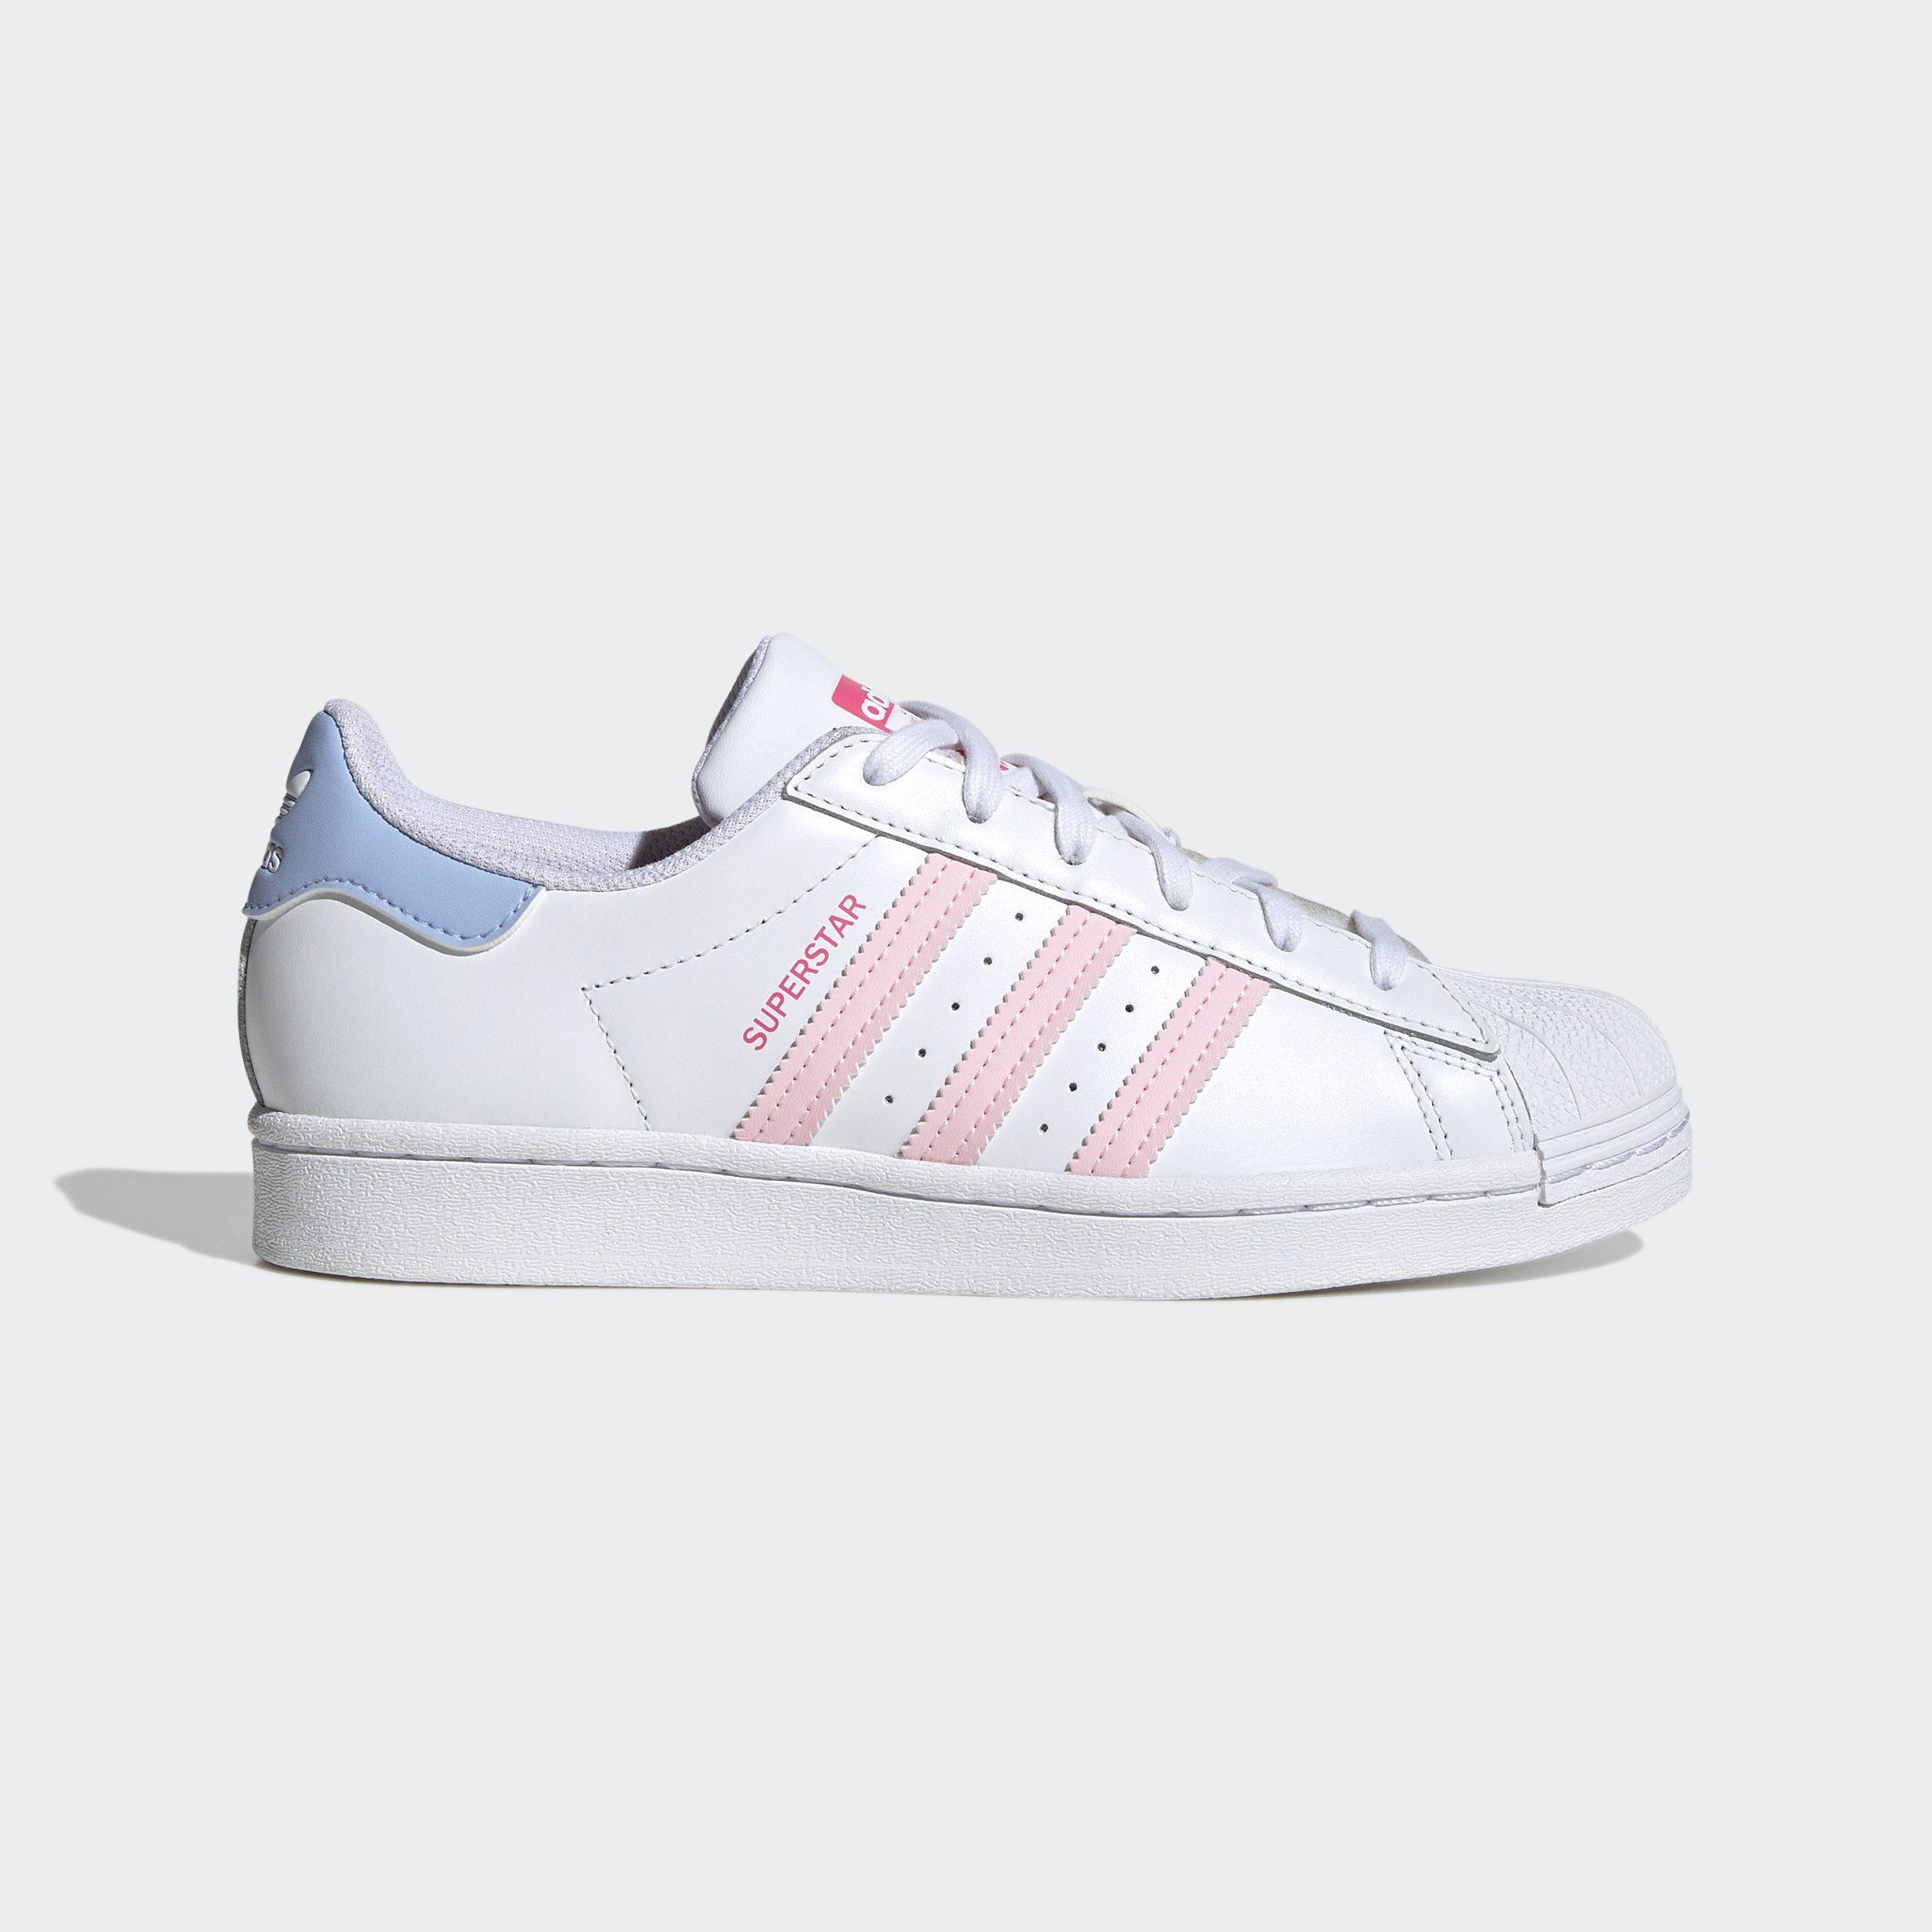 Originals Sneaker Clear Pulse Magenta / SUPERSTAR adidas Cloud White / Pink